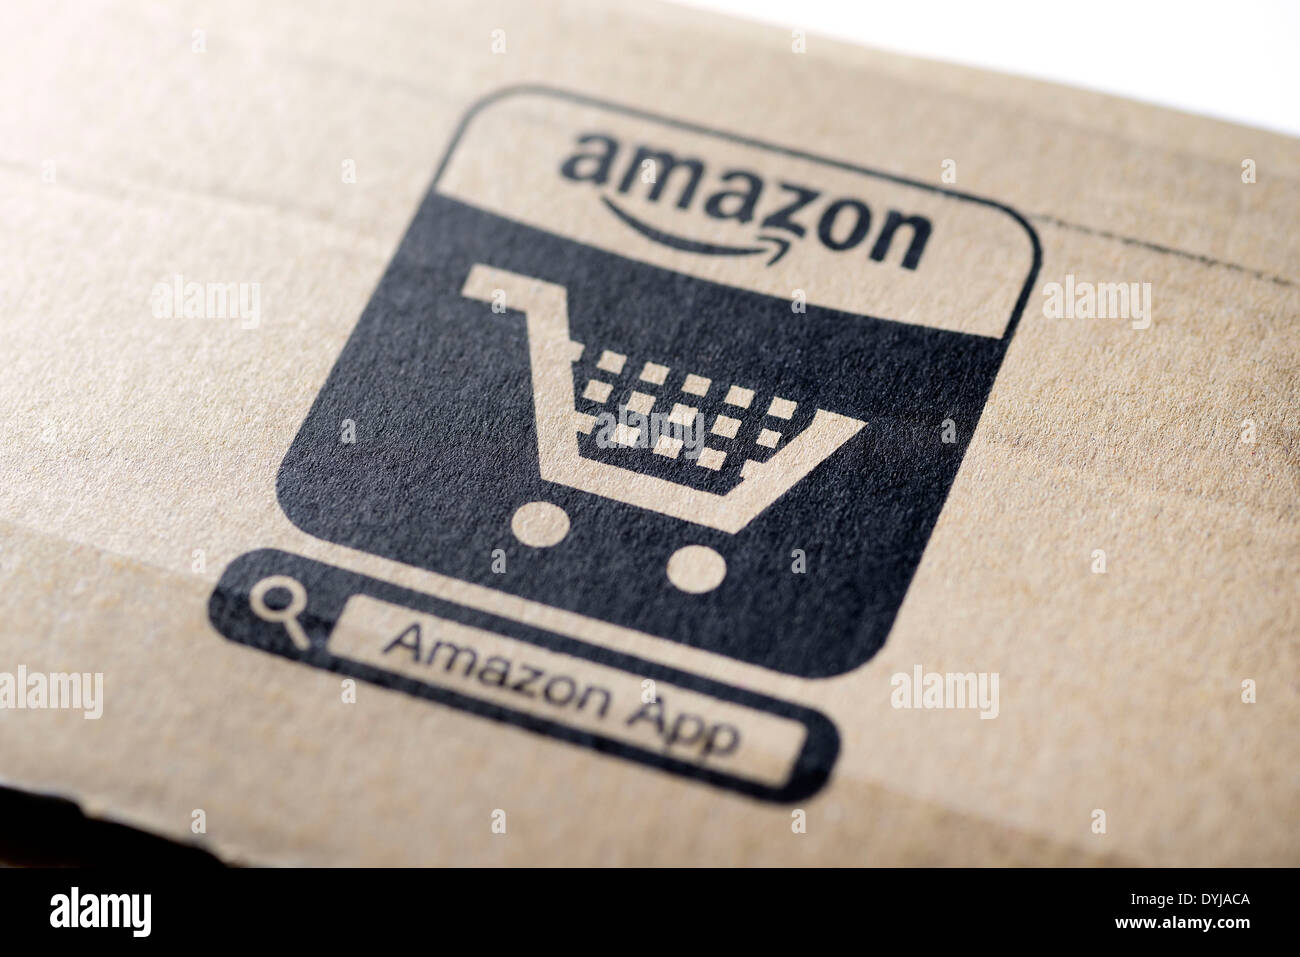 Amazon imballaggio con carrello, Amazon-Verpackung Einkaufswagen mit Foto Stock